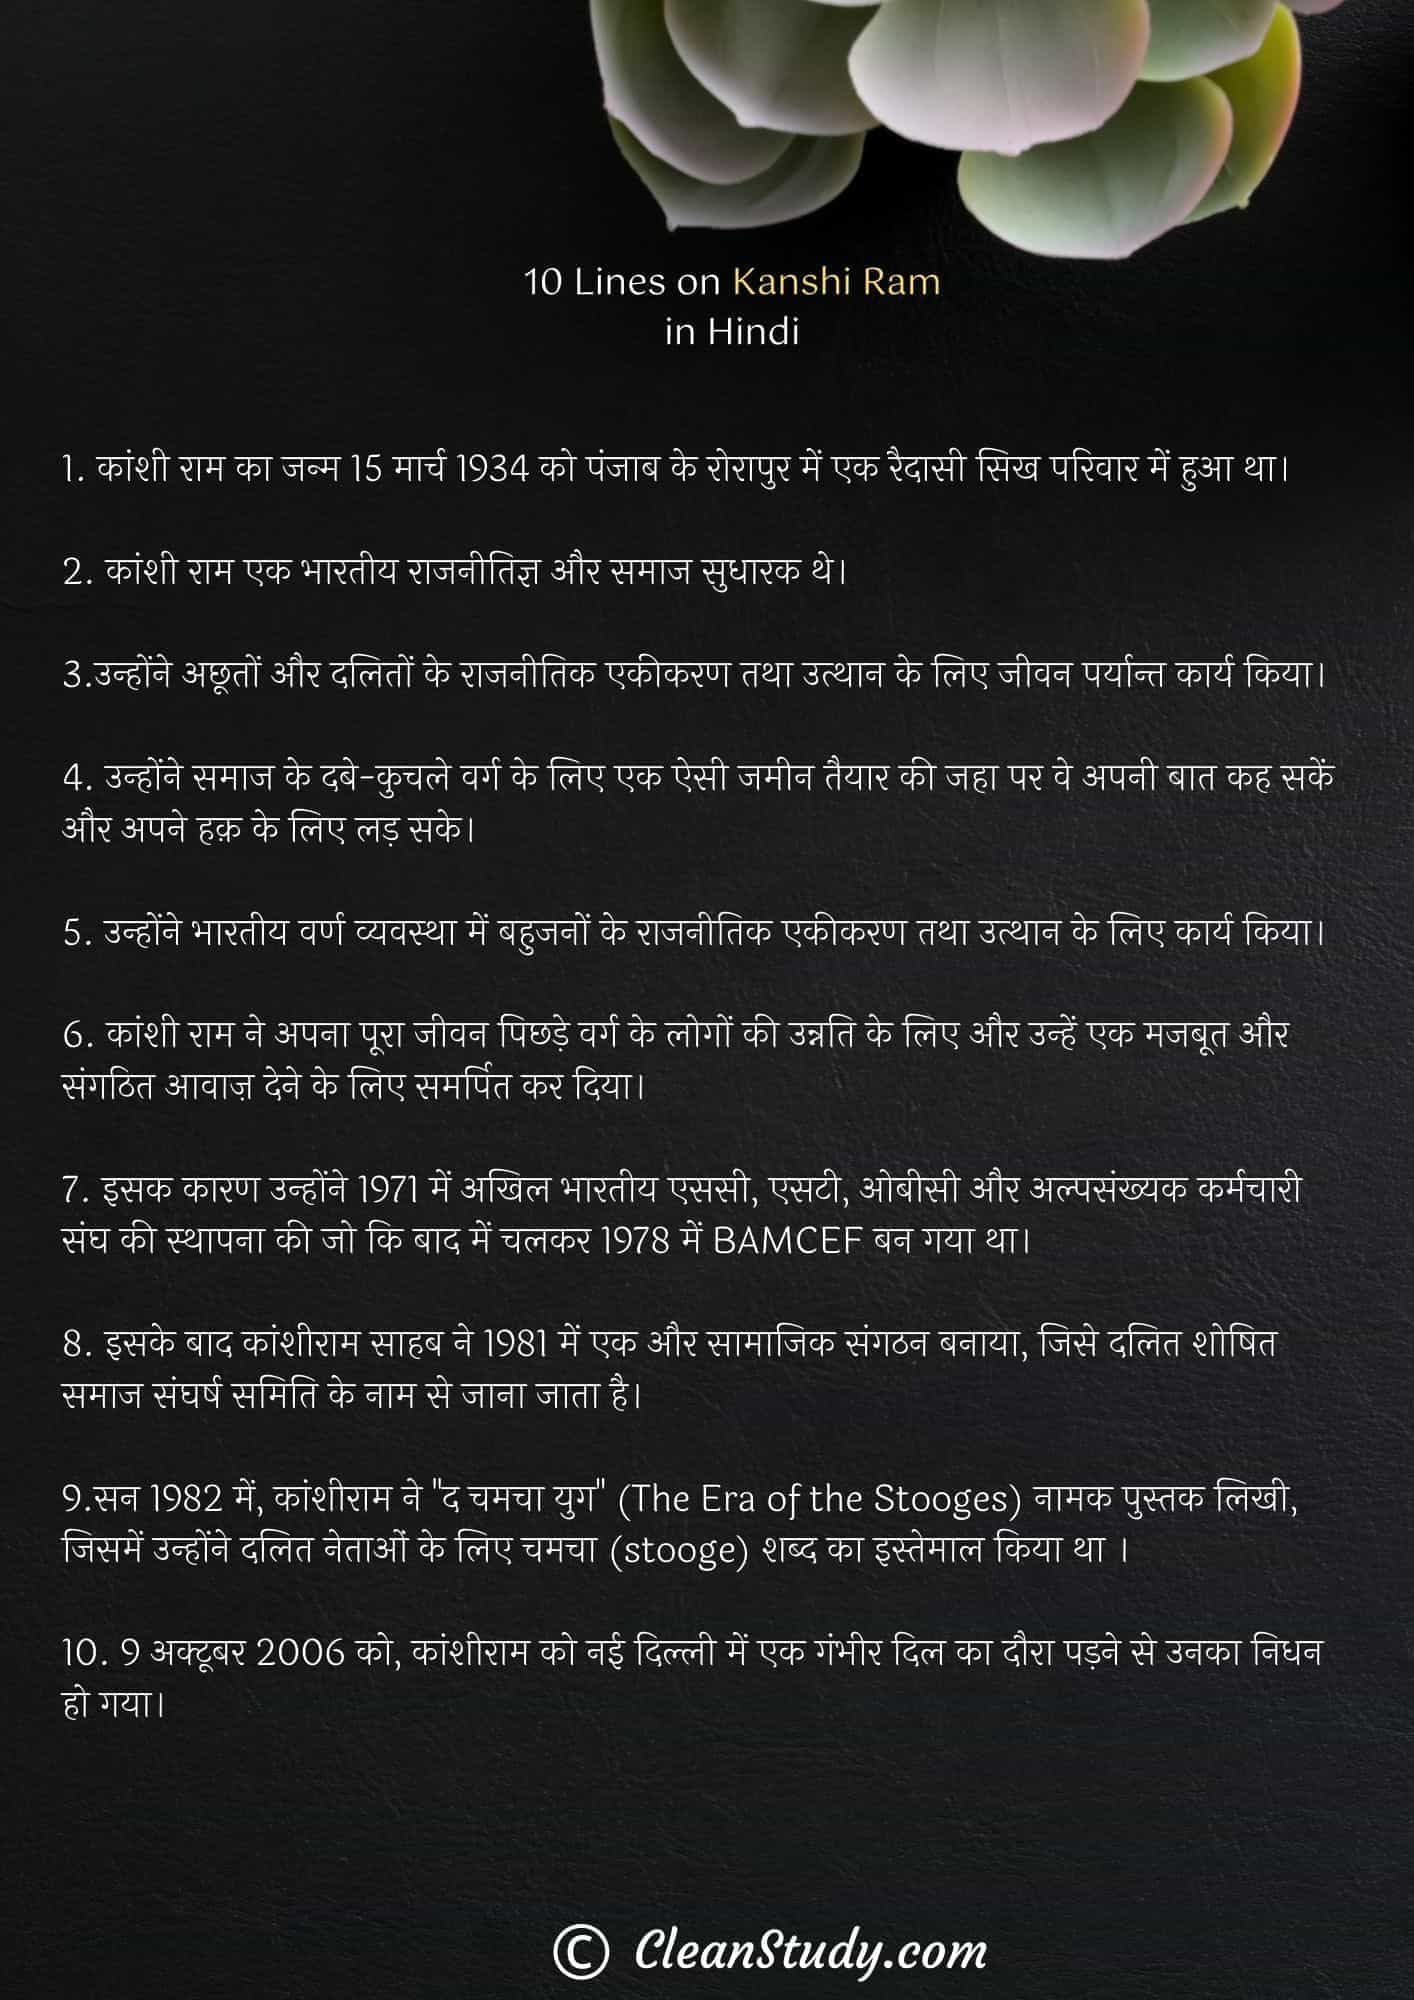 10 Lines on Kanshi Ram in Hindi